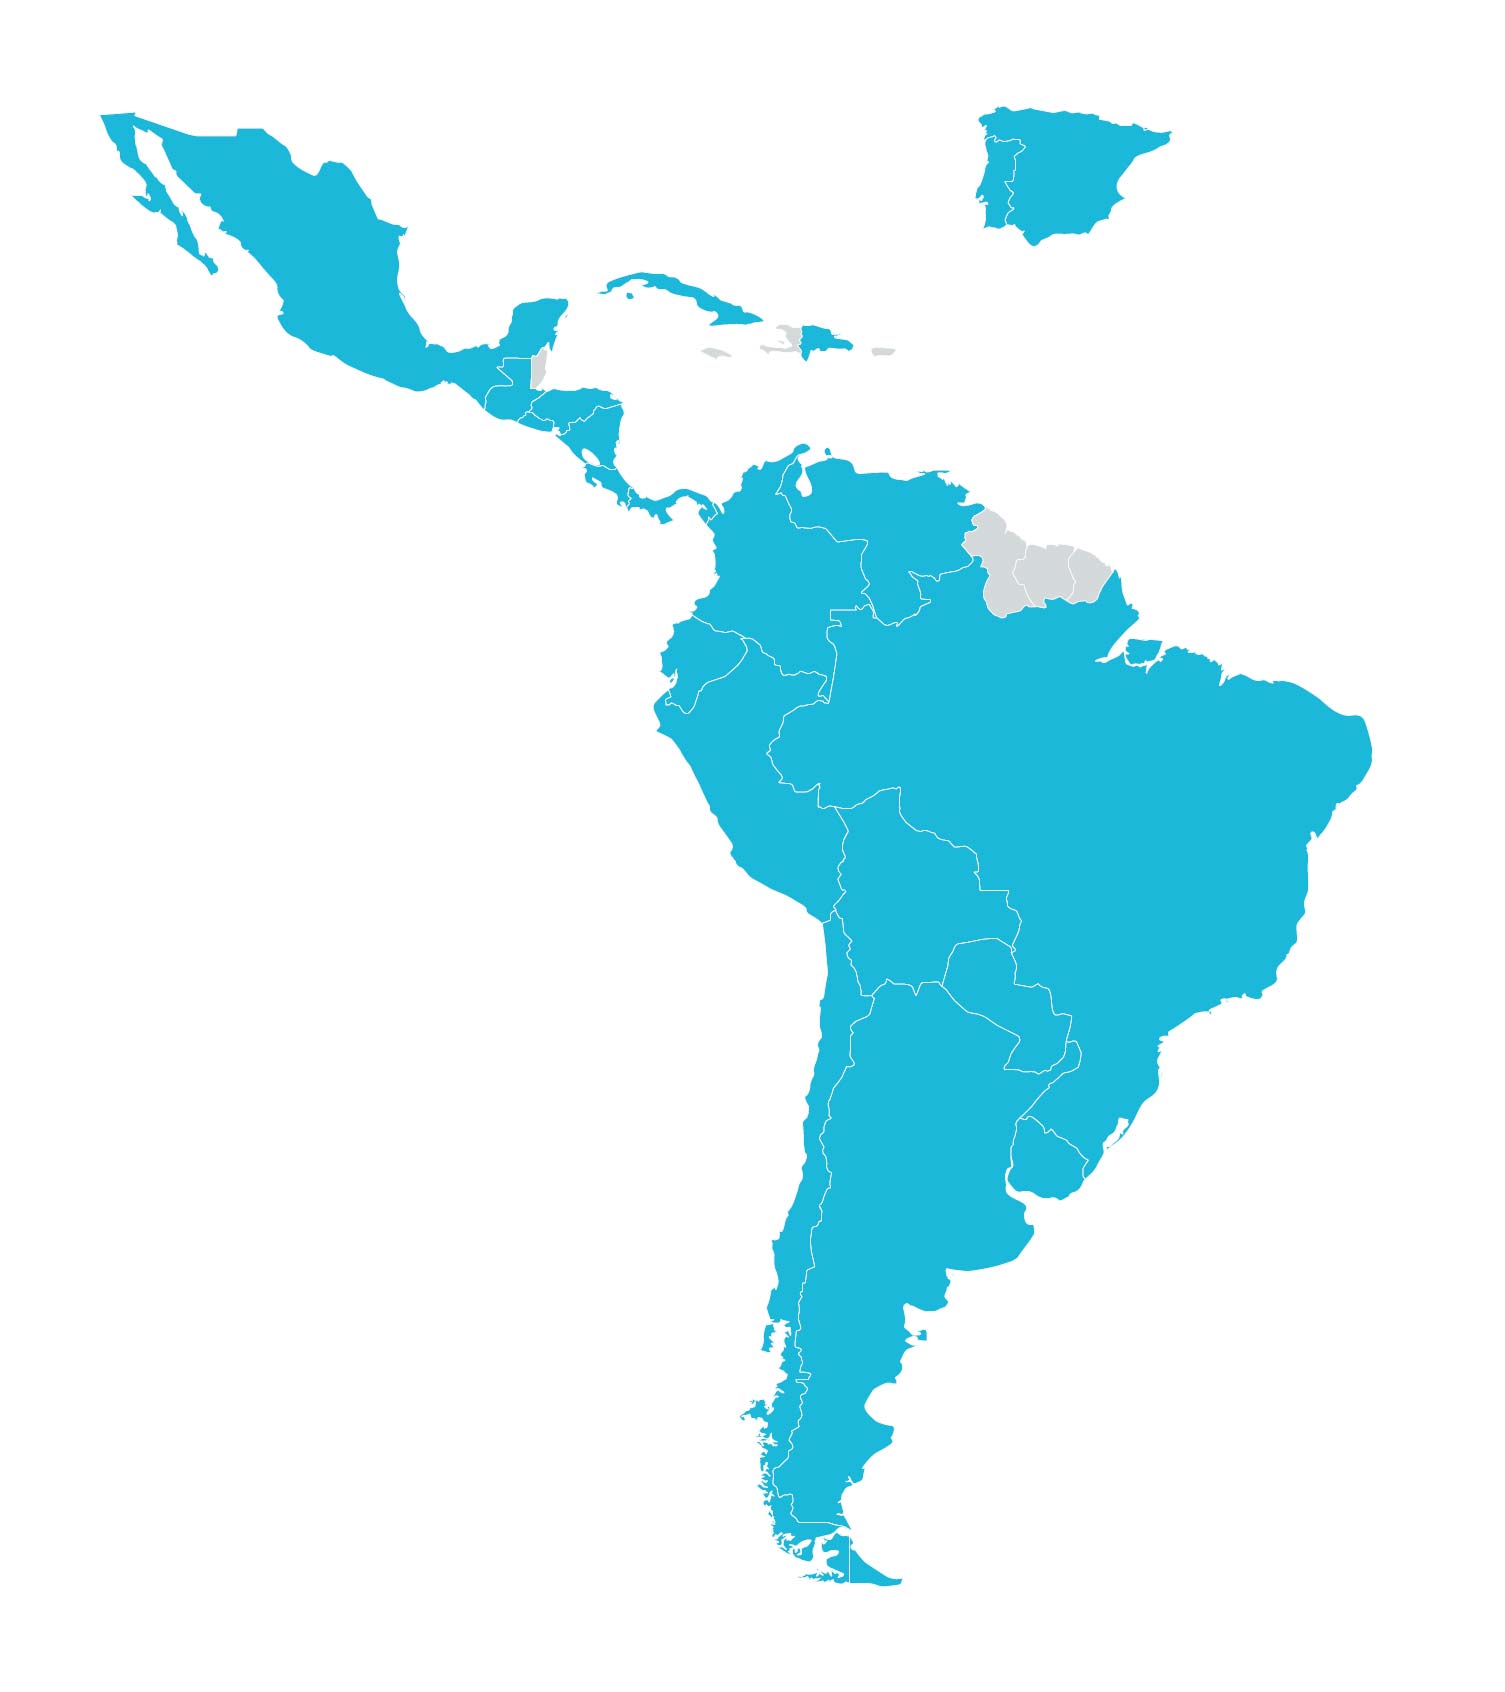 Map of Ibero-American countries.